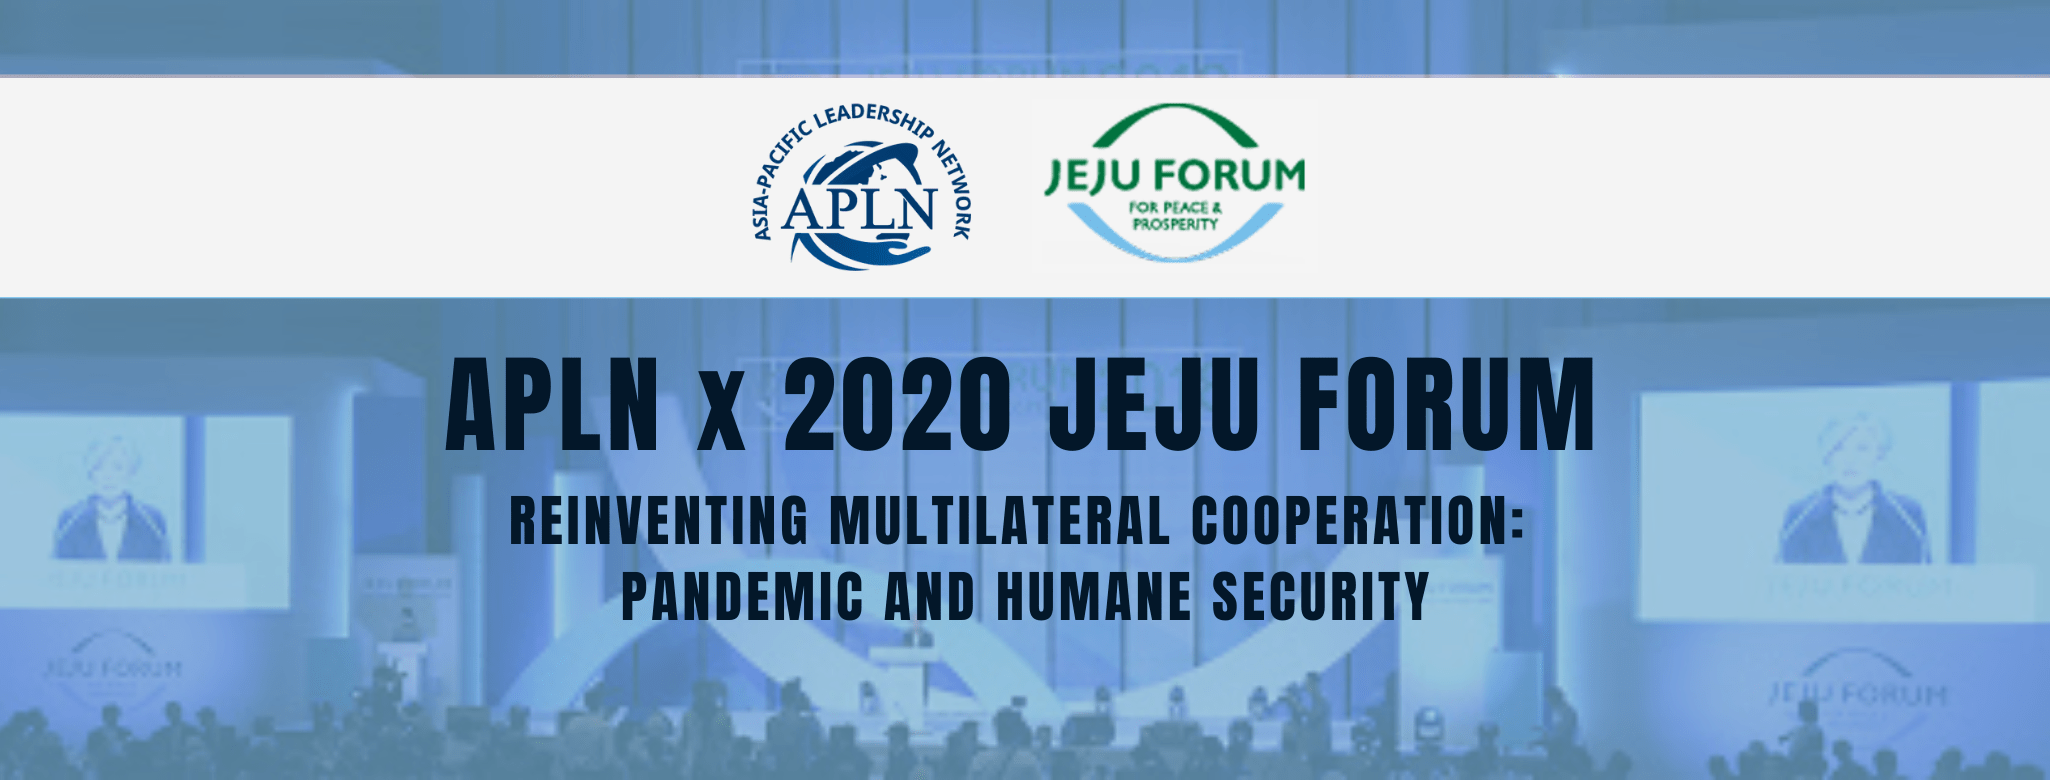 APLN at Jeju Forum 2020: Reinventing Multilateral Cooperation